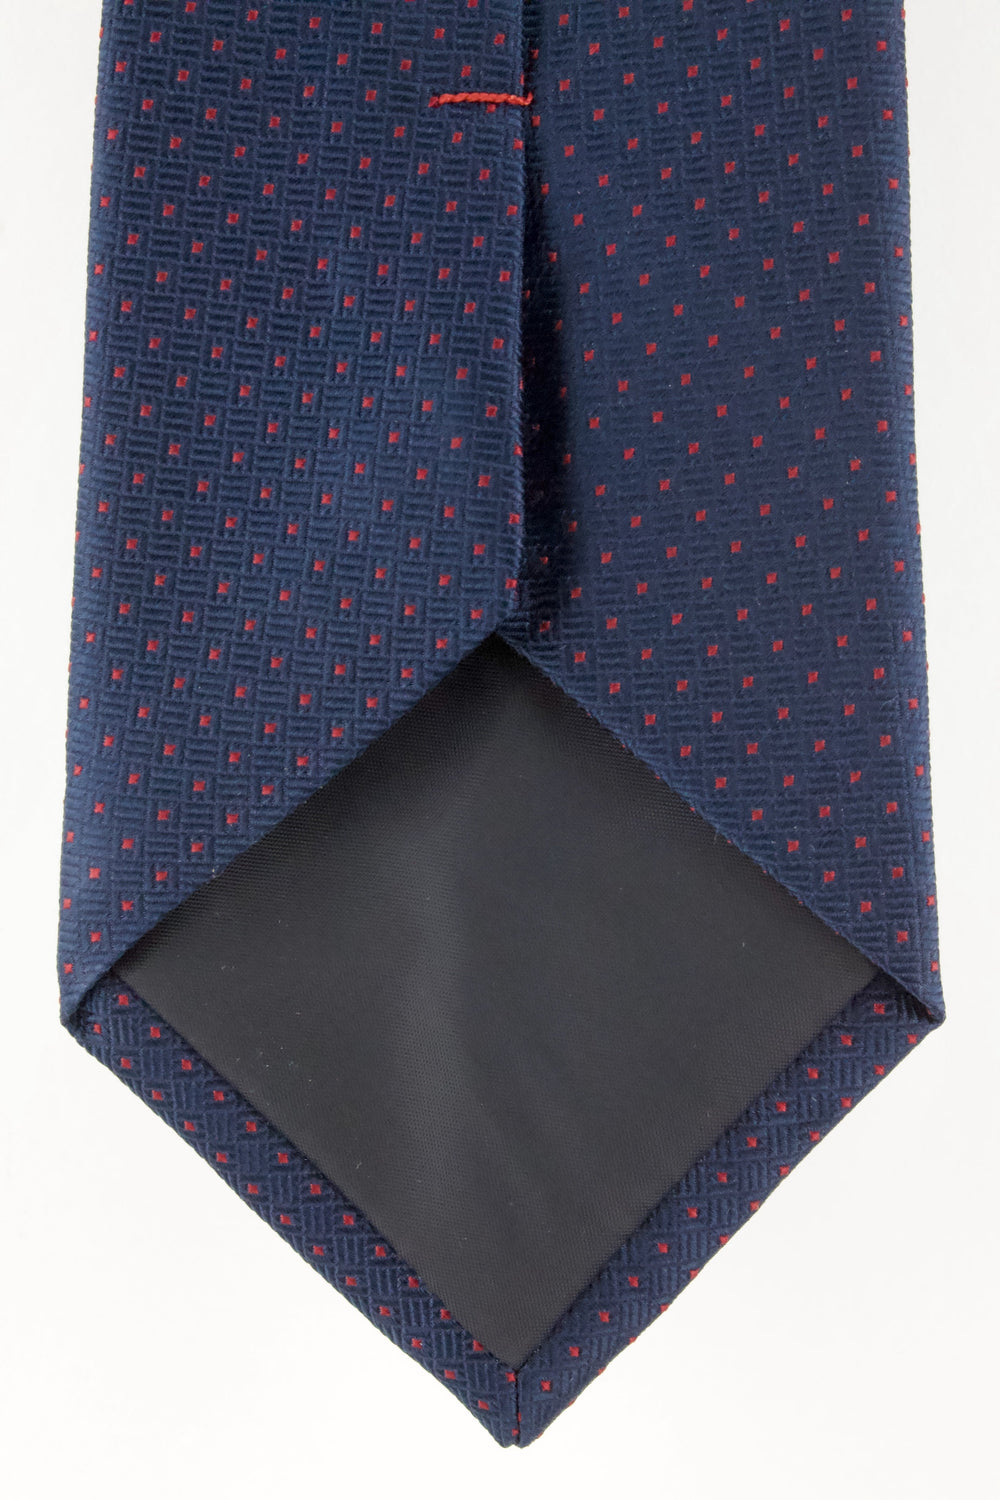 Cravate en soie tissée marine motif rouge